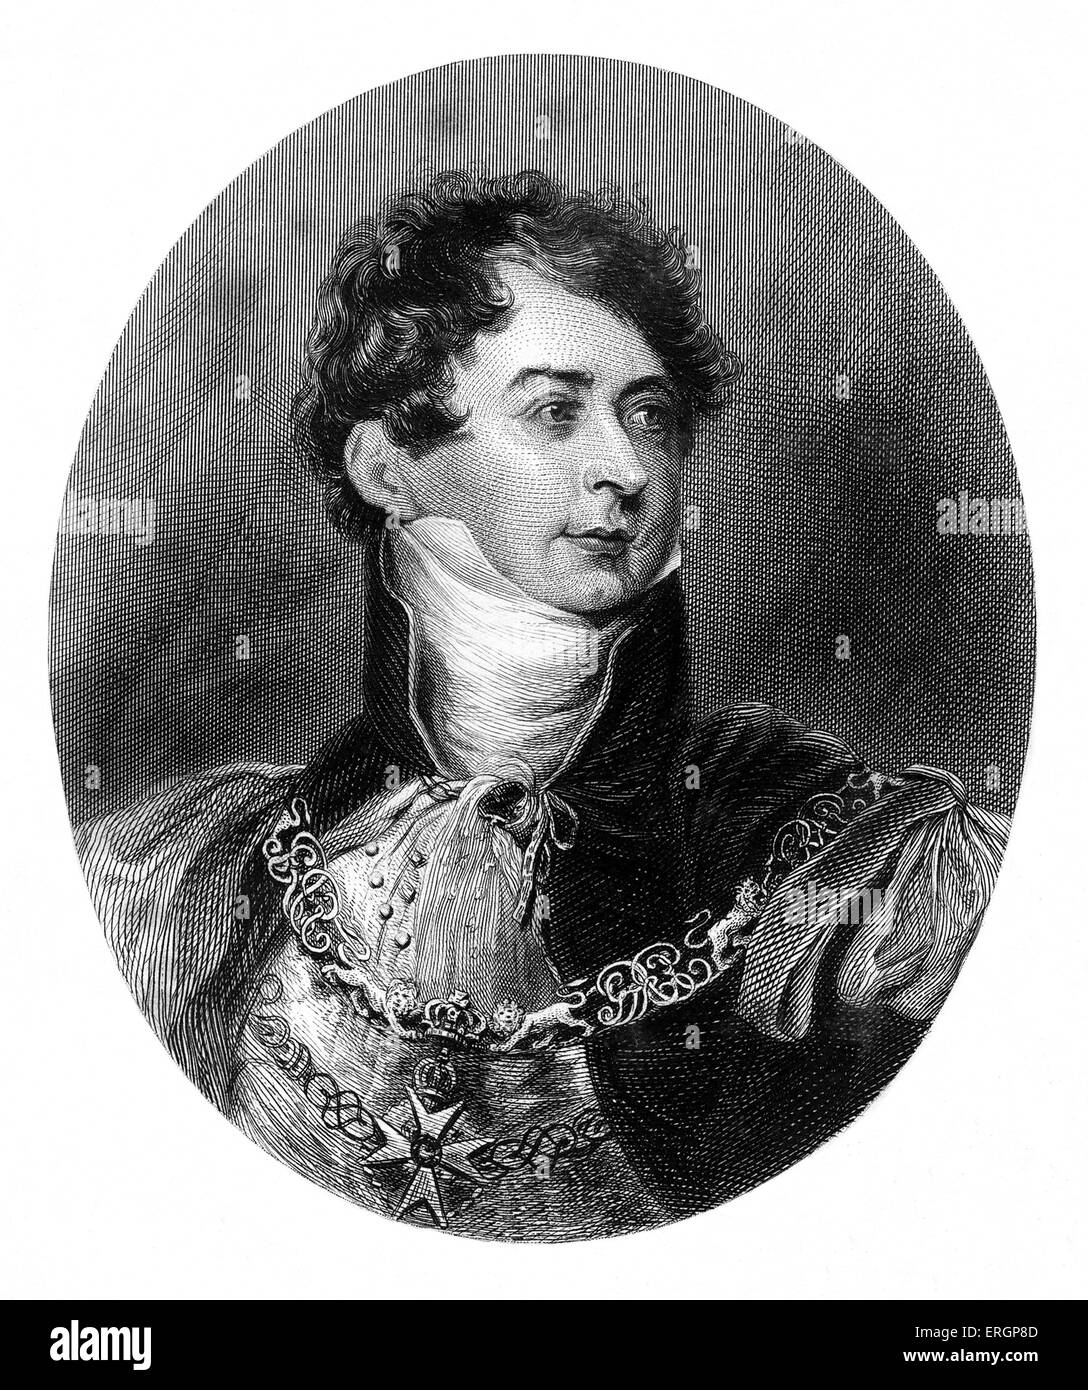 El rey Jorge IV, retrato. Reinó de 1820 - 1830. George actuó como regente de su padre a partir de 1811-1820. Foto de stock